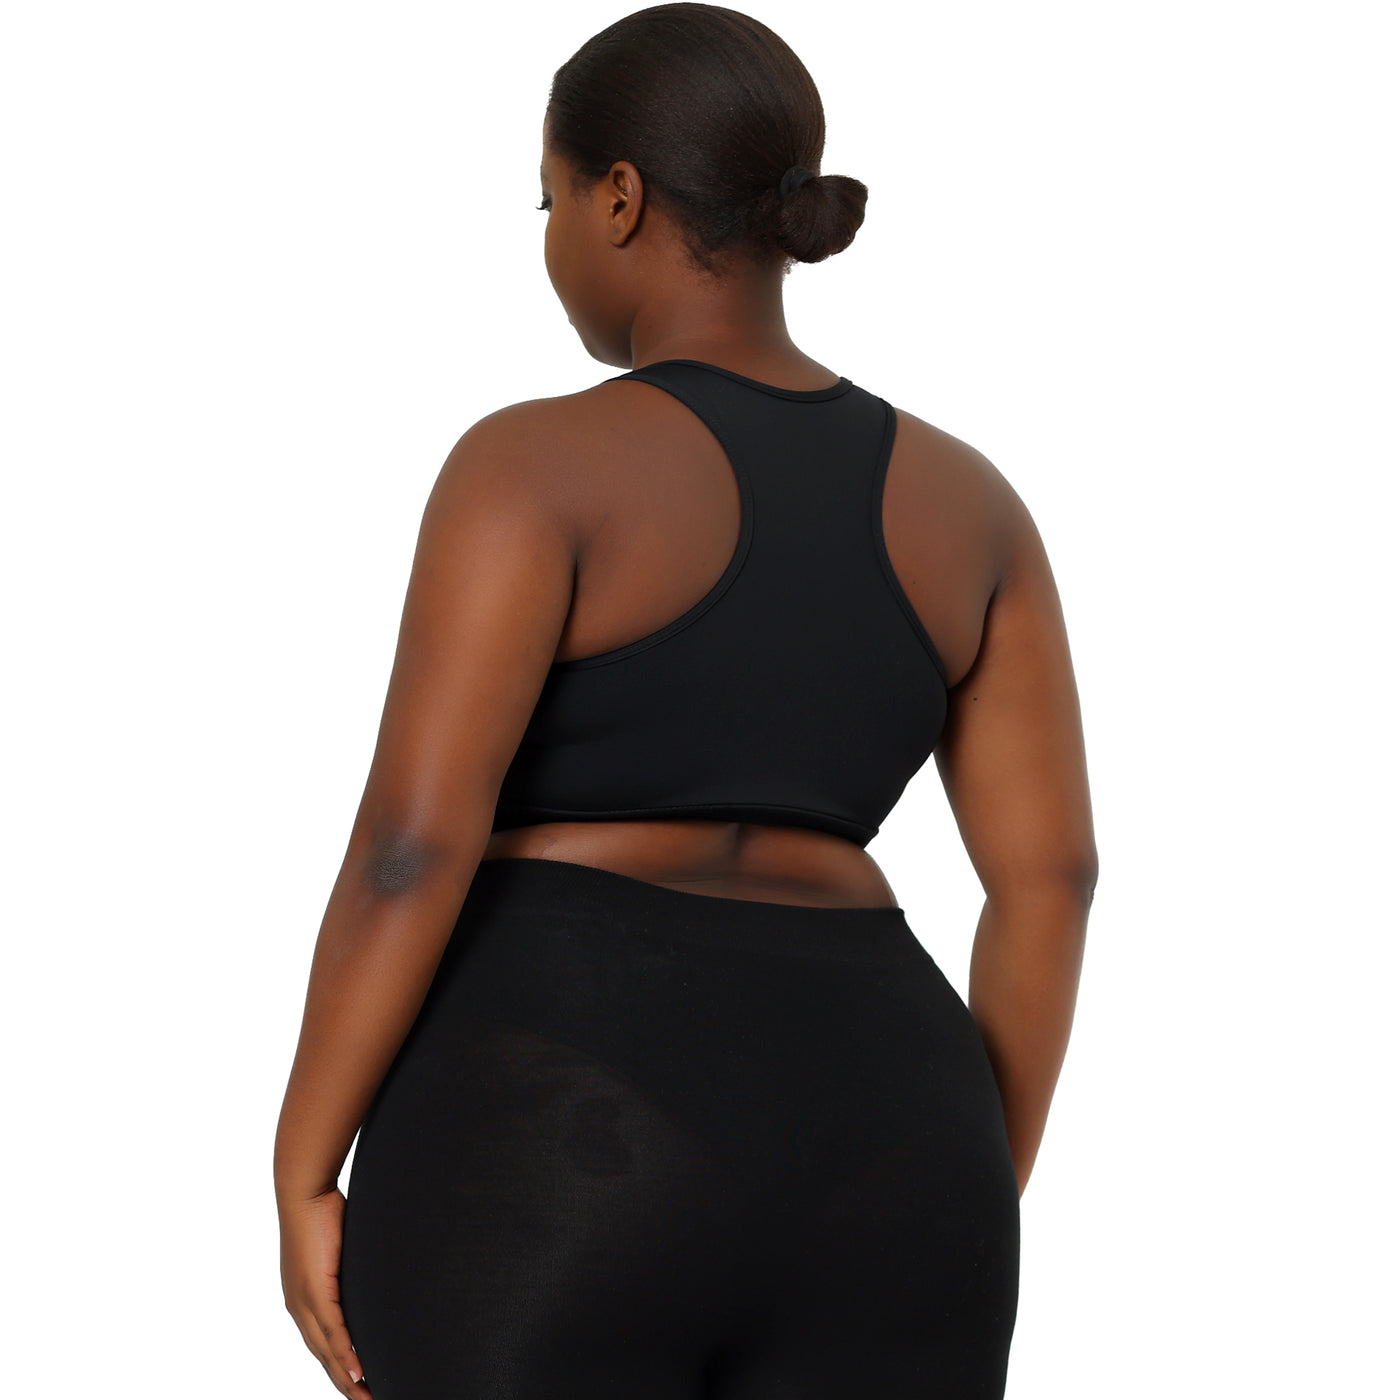 Bublédon Women's Plus Size Sport Bras Full Figure Lingerie Breathable Hollow Support Bra